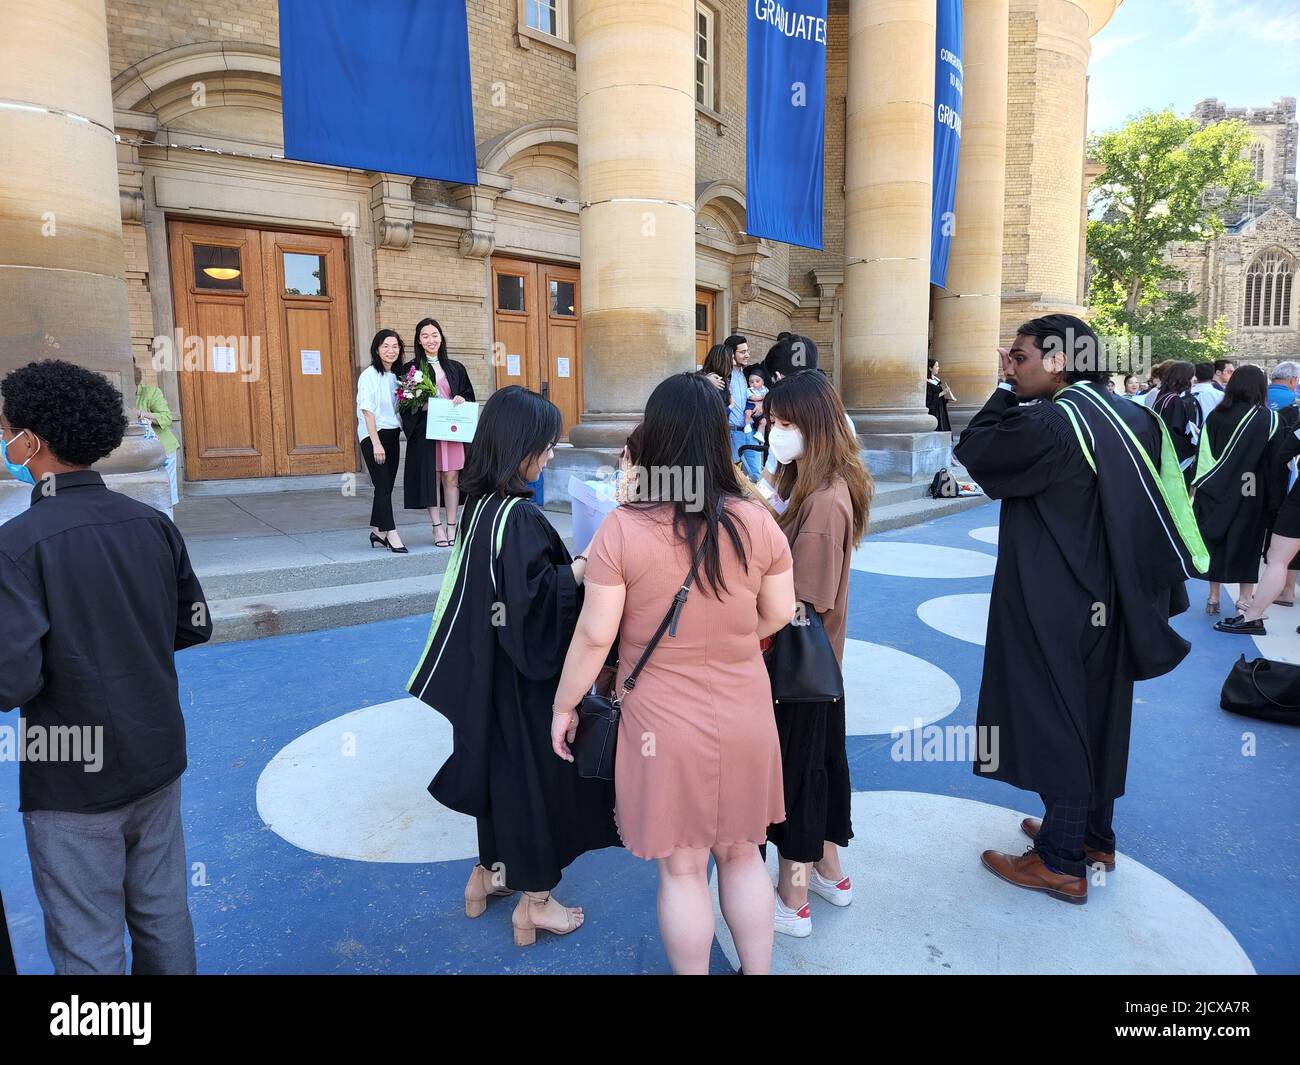 University of Toronto Convocation Hall Graduation, Toronto Stock Photo